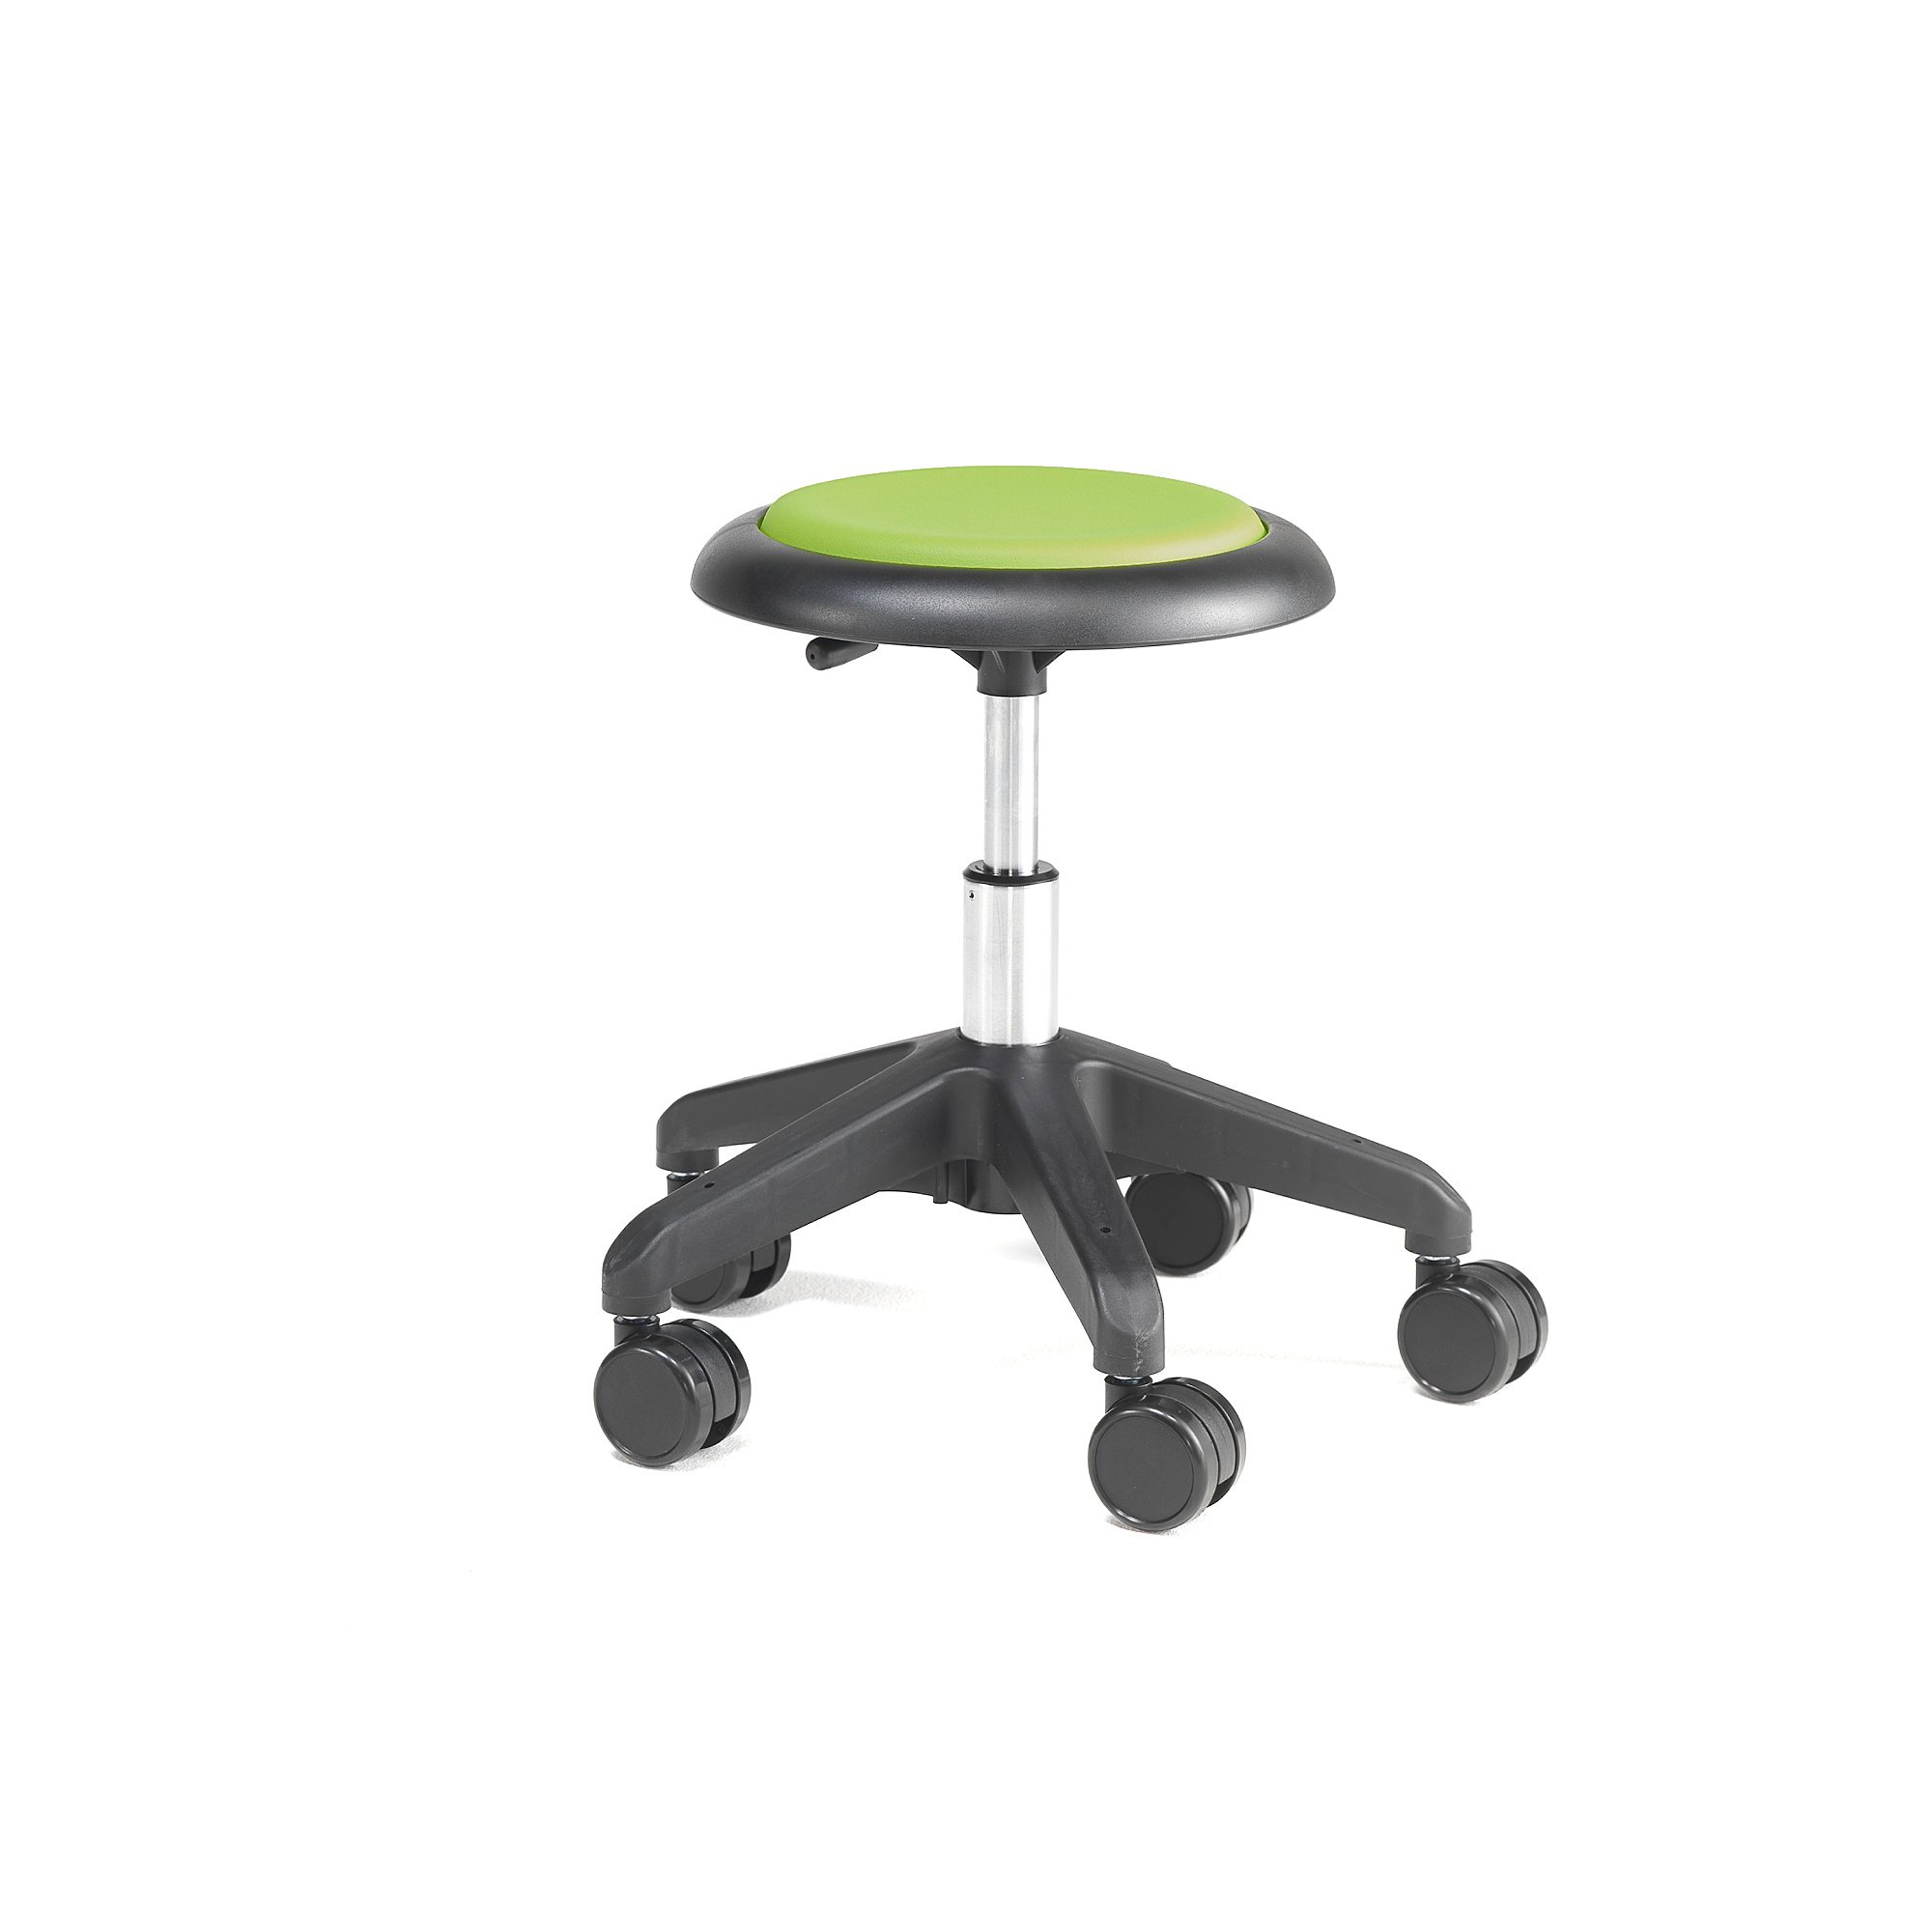 E-shop Pracovná dielenská stolička MICRO, s kolieskami, výška 380-510 mm, zelená